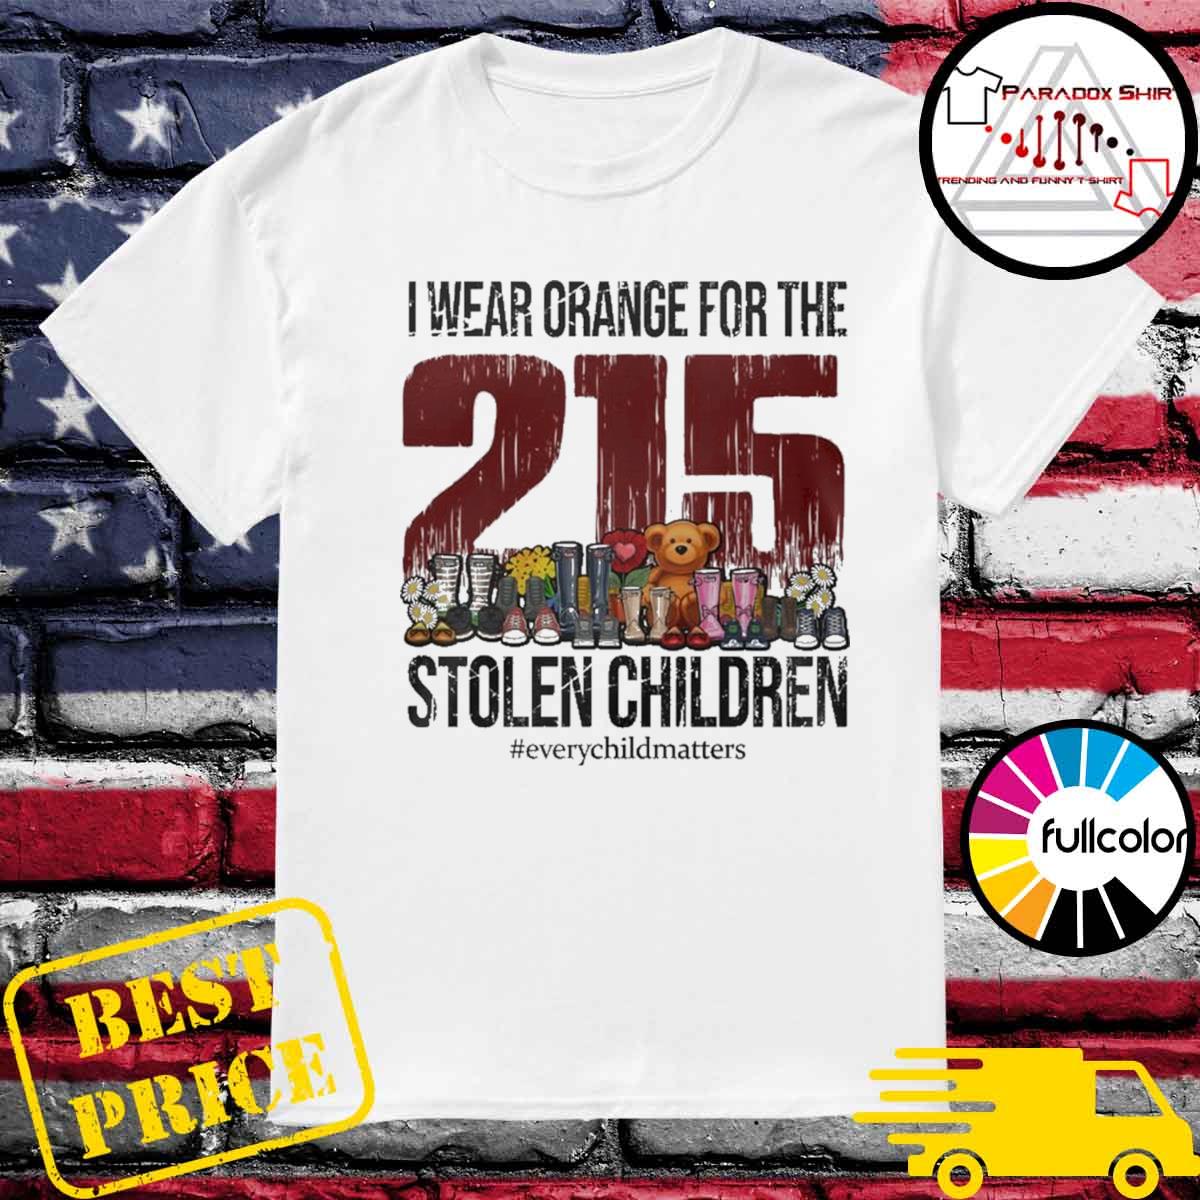 I wear orange for the 215 stolen children every child matters shirt